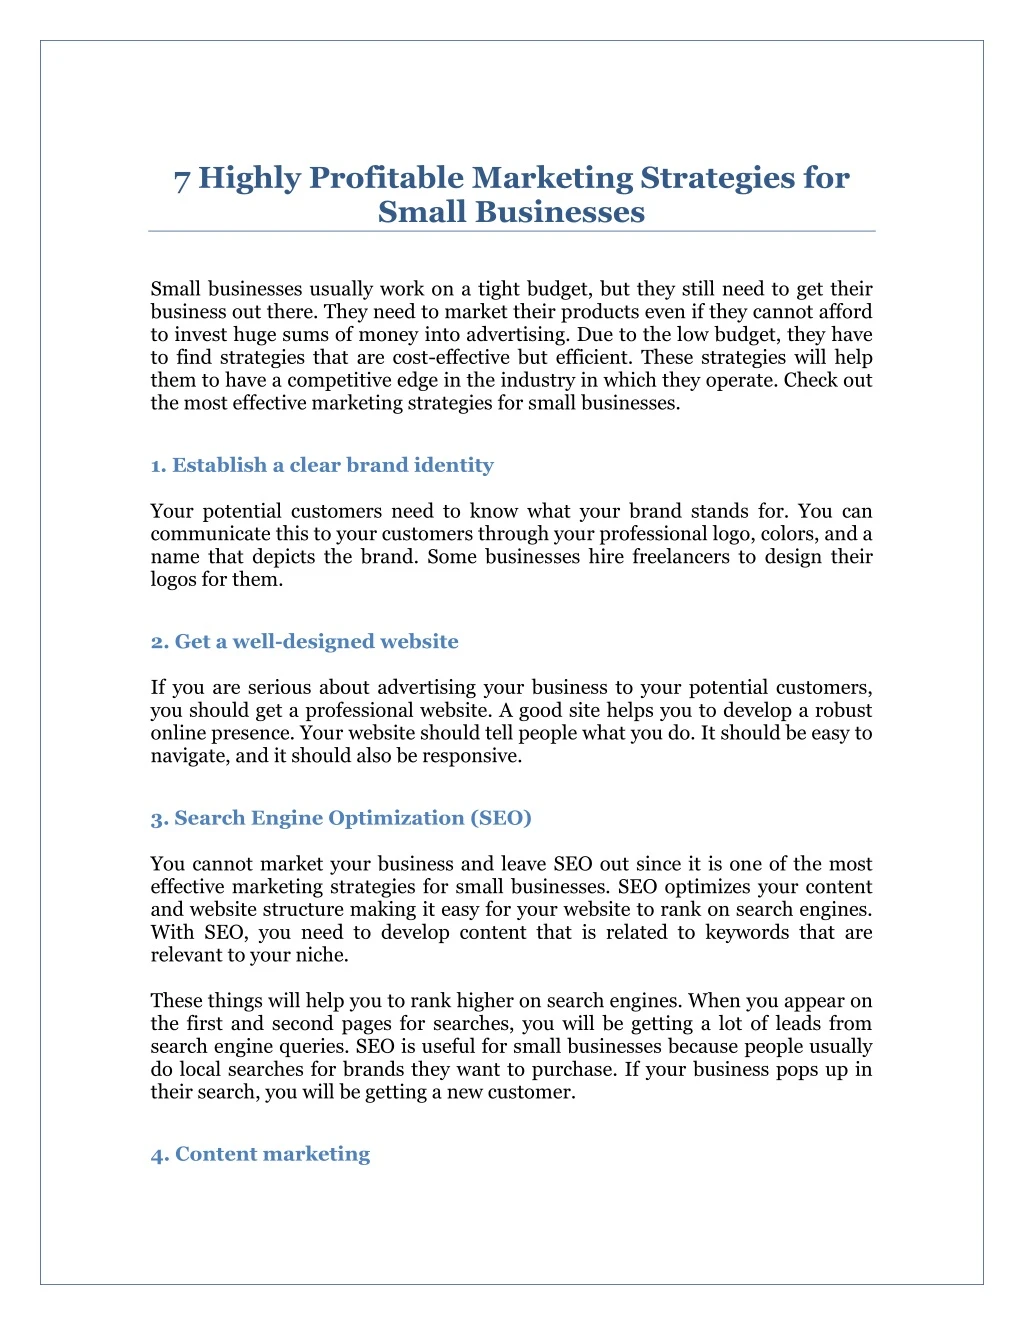 7 highly profitable marketing strategies